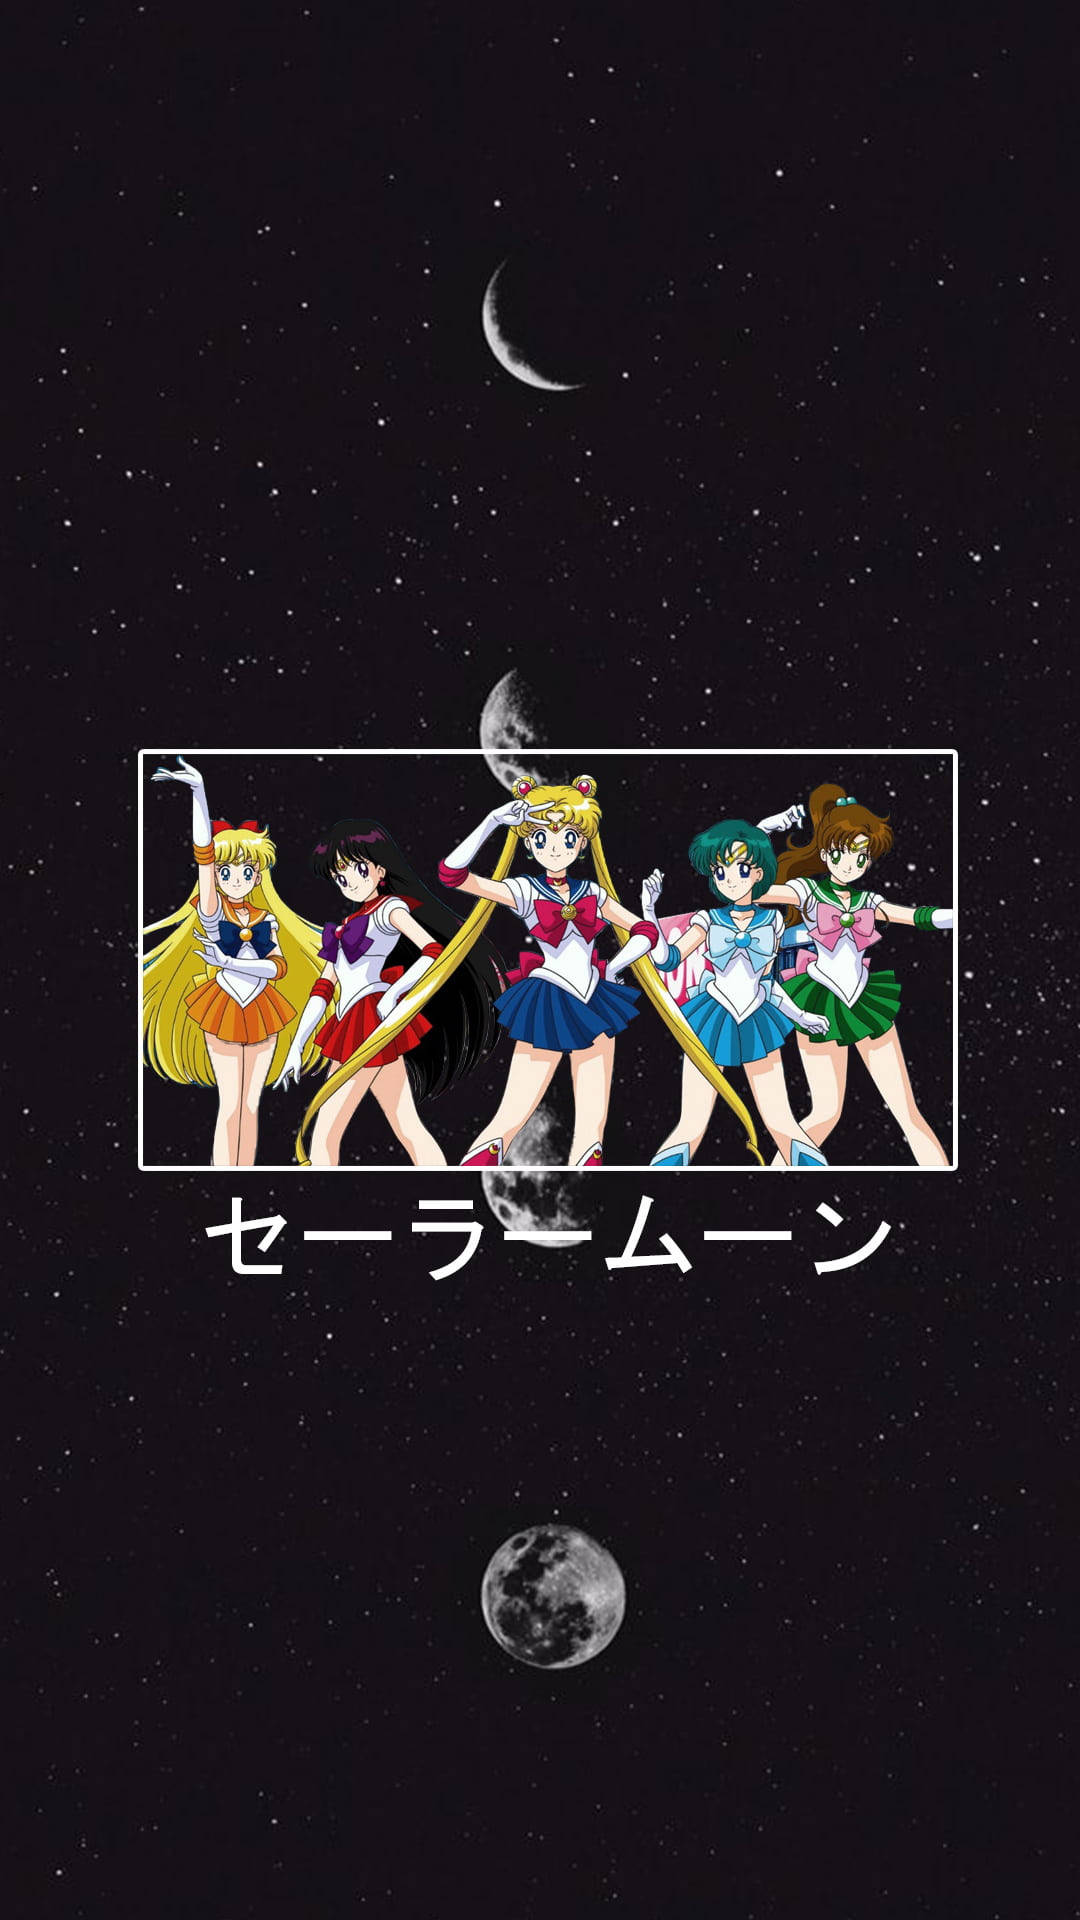 Wallpaper of Sailor Moon/Usagi Tsukino by UsagiTsukino55 on DeviantArt